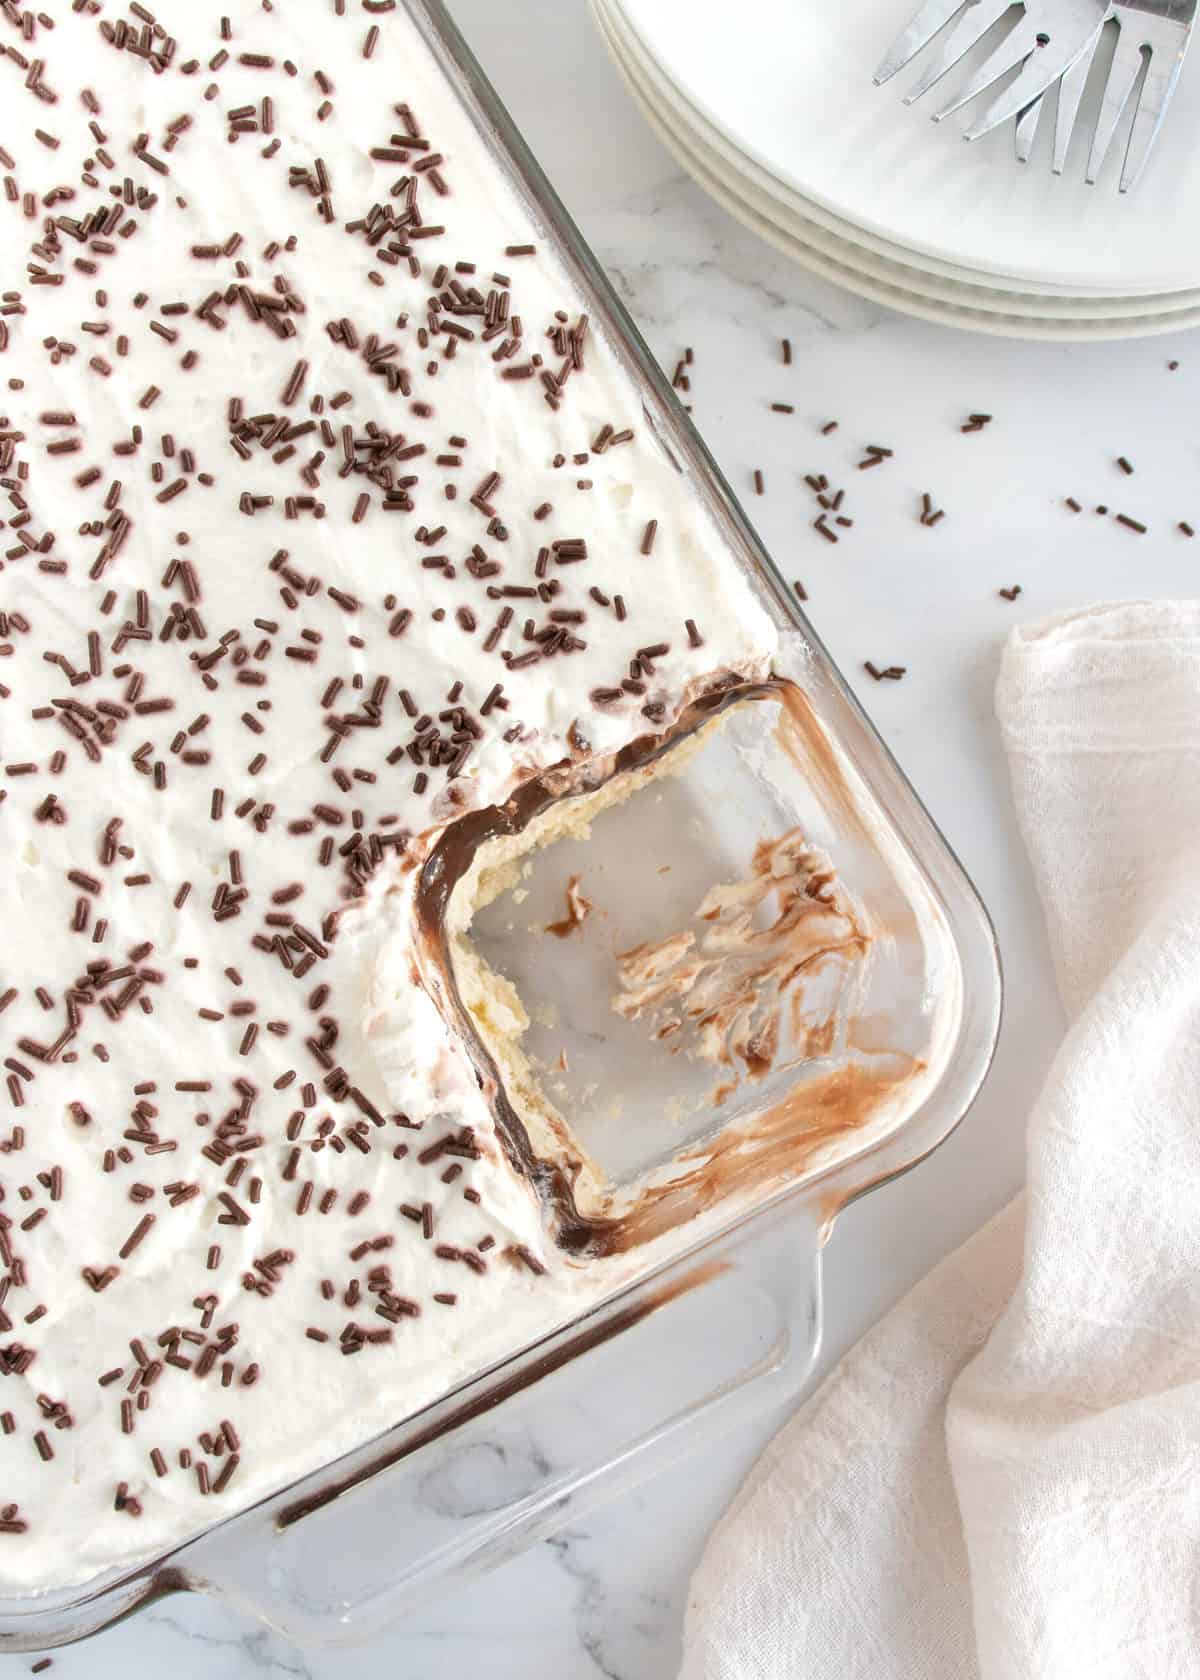 Layered Chocolate Pudding Dessert by The BakerMama